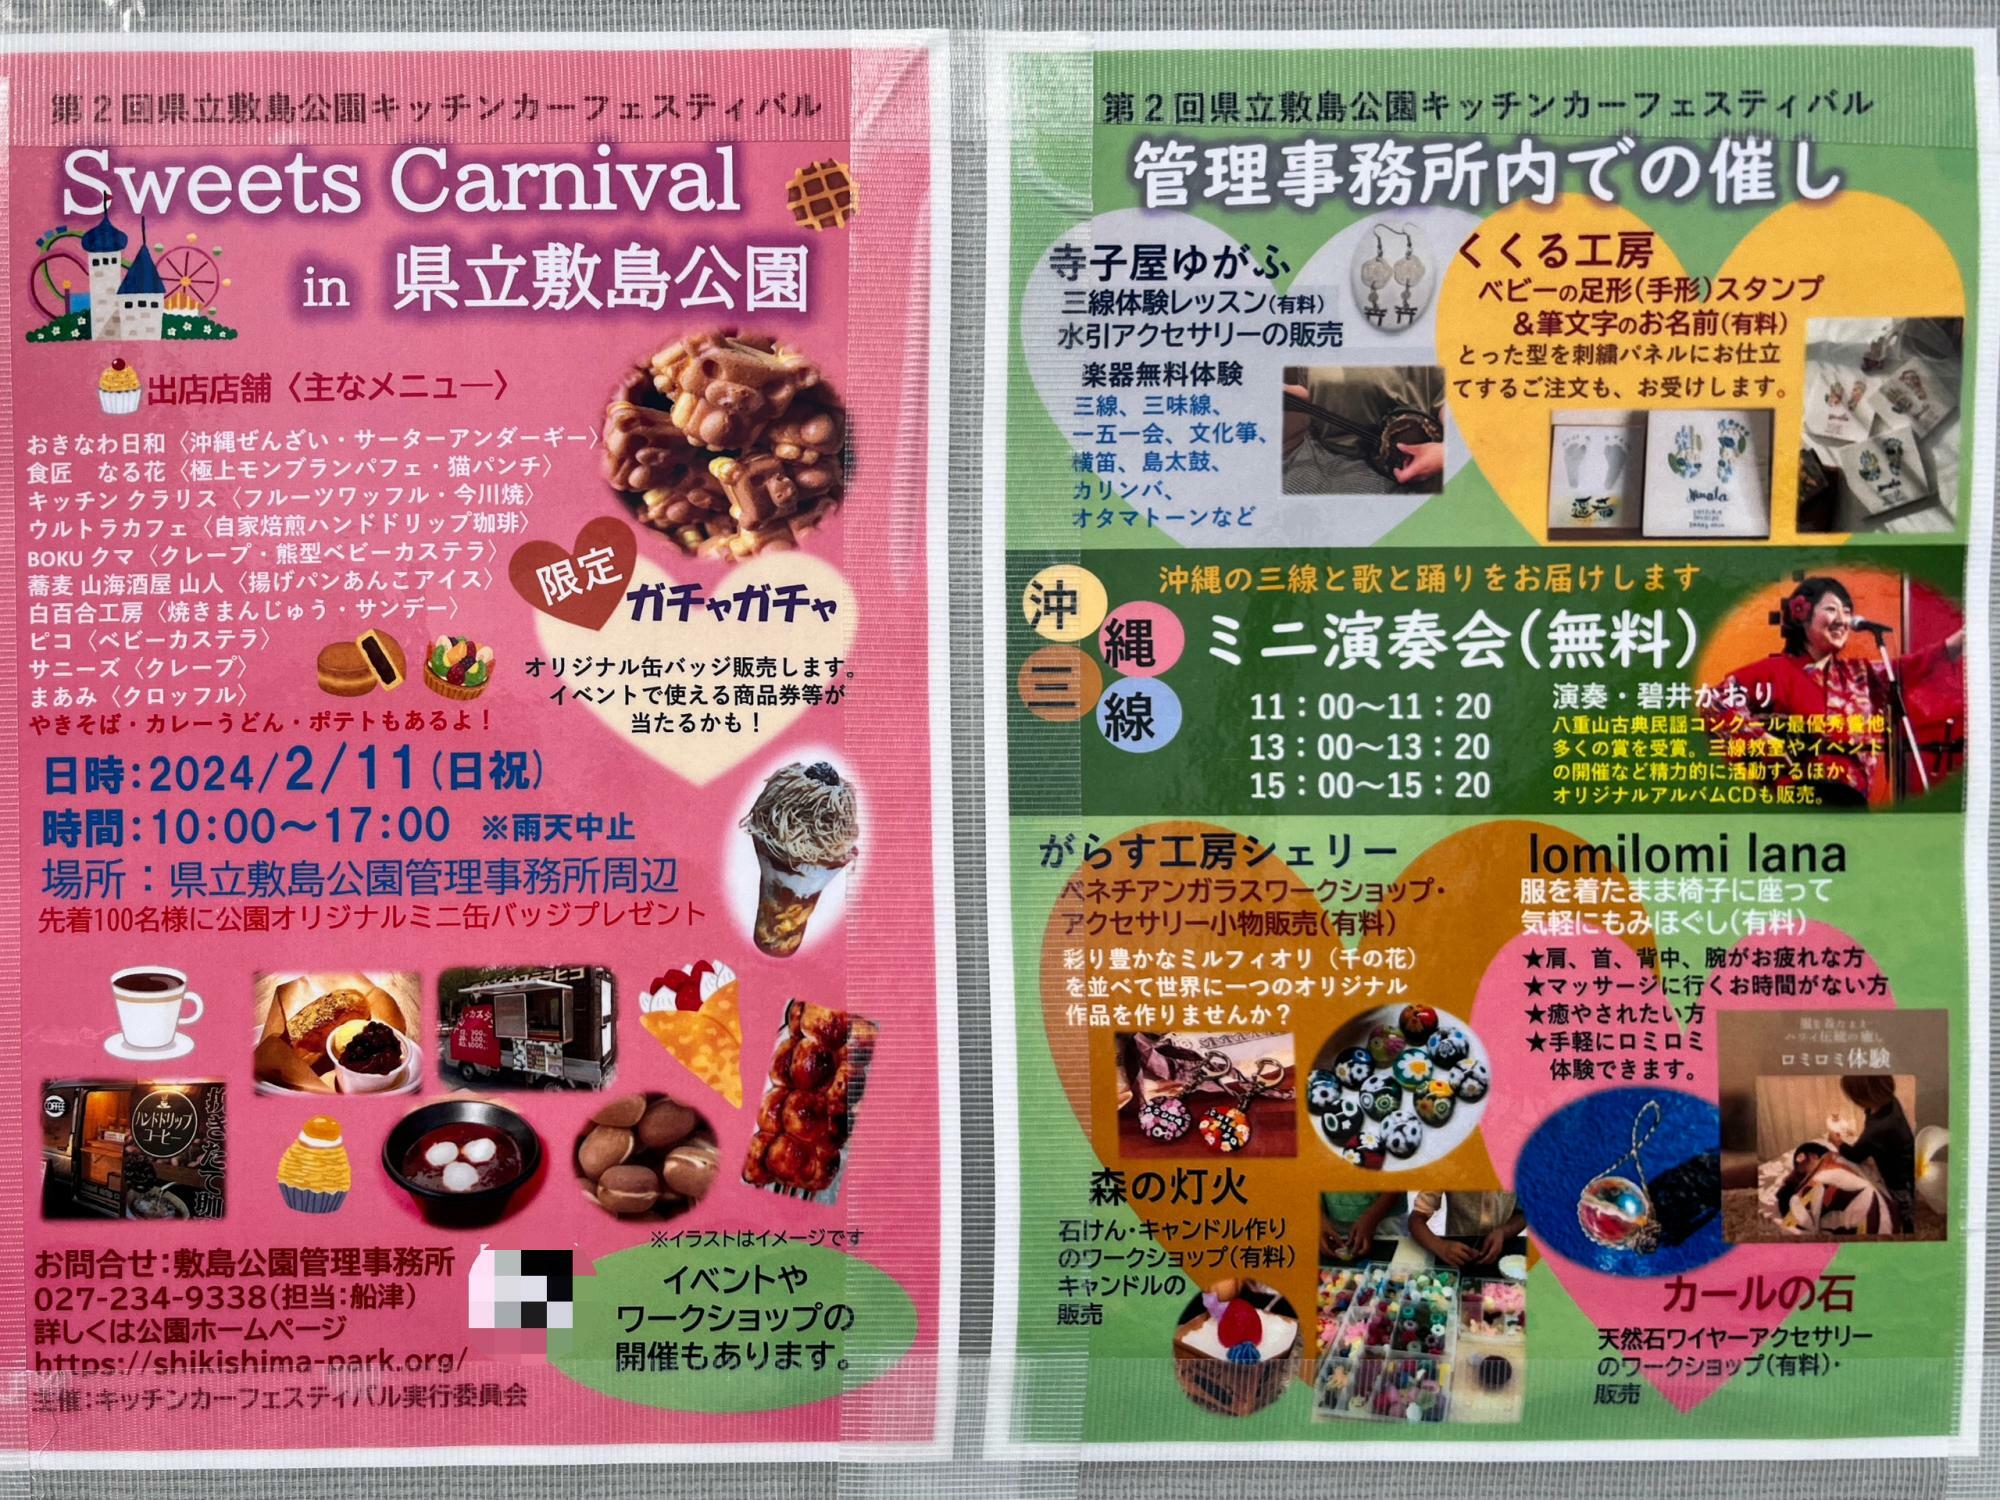 「Sweets Carnival in 県立敷島公園」開催告知のチラシ